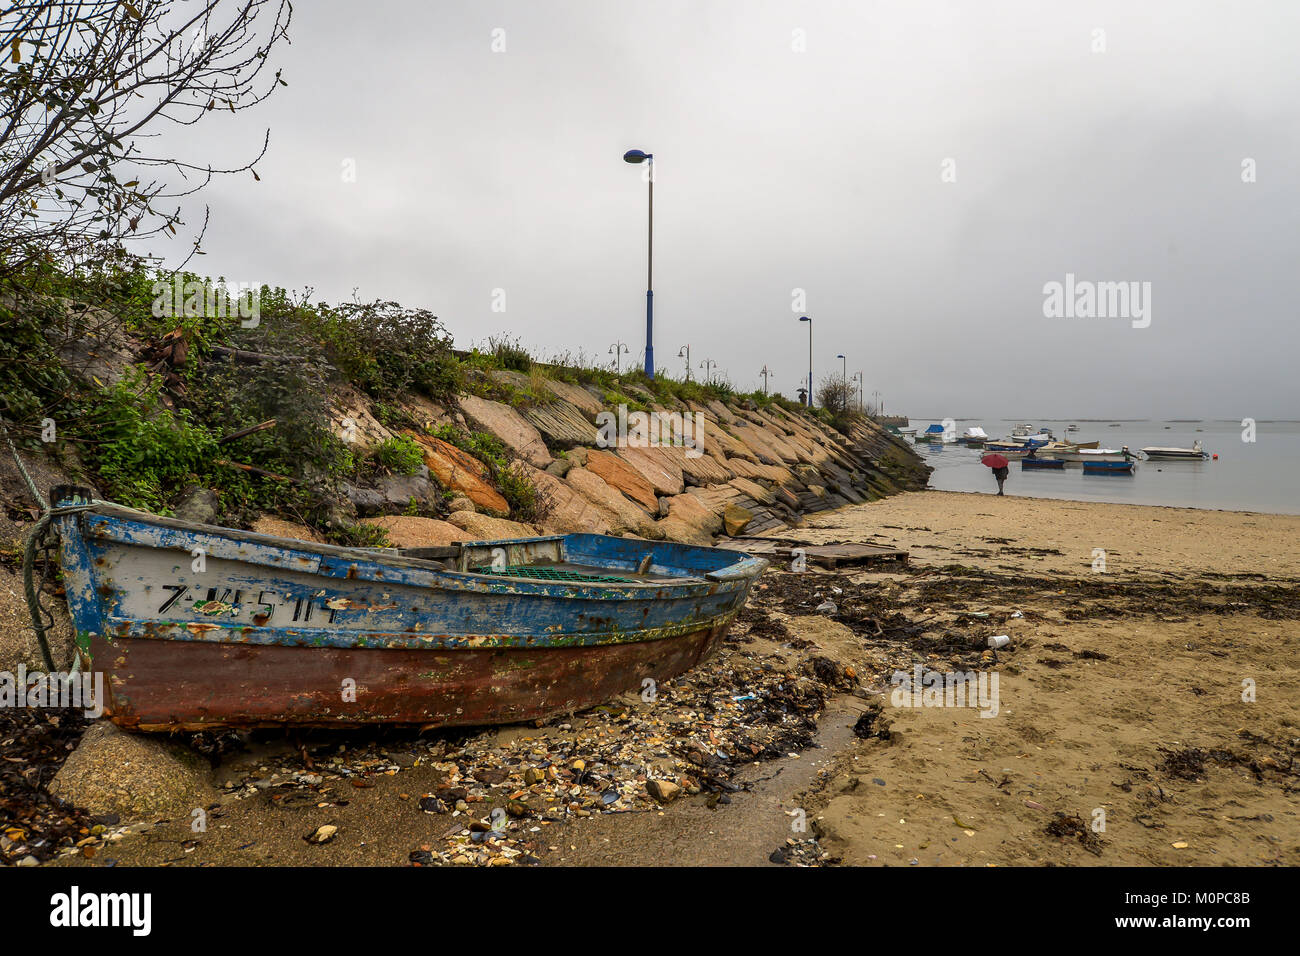 An old boat sitting on a quiet beach - Vigo, Galicia - Spain Stock Photo